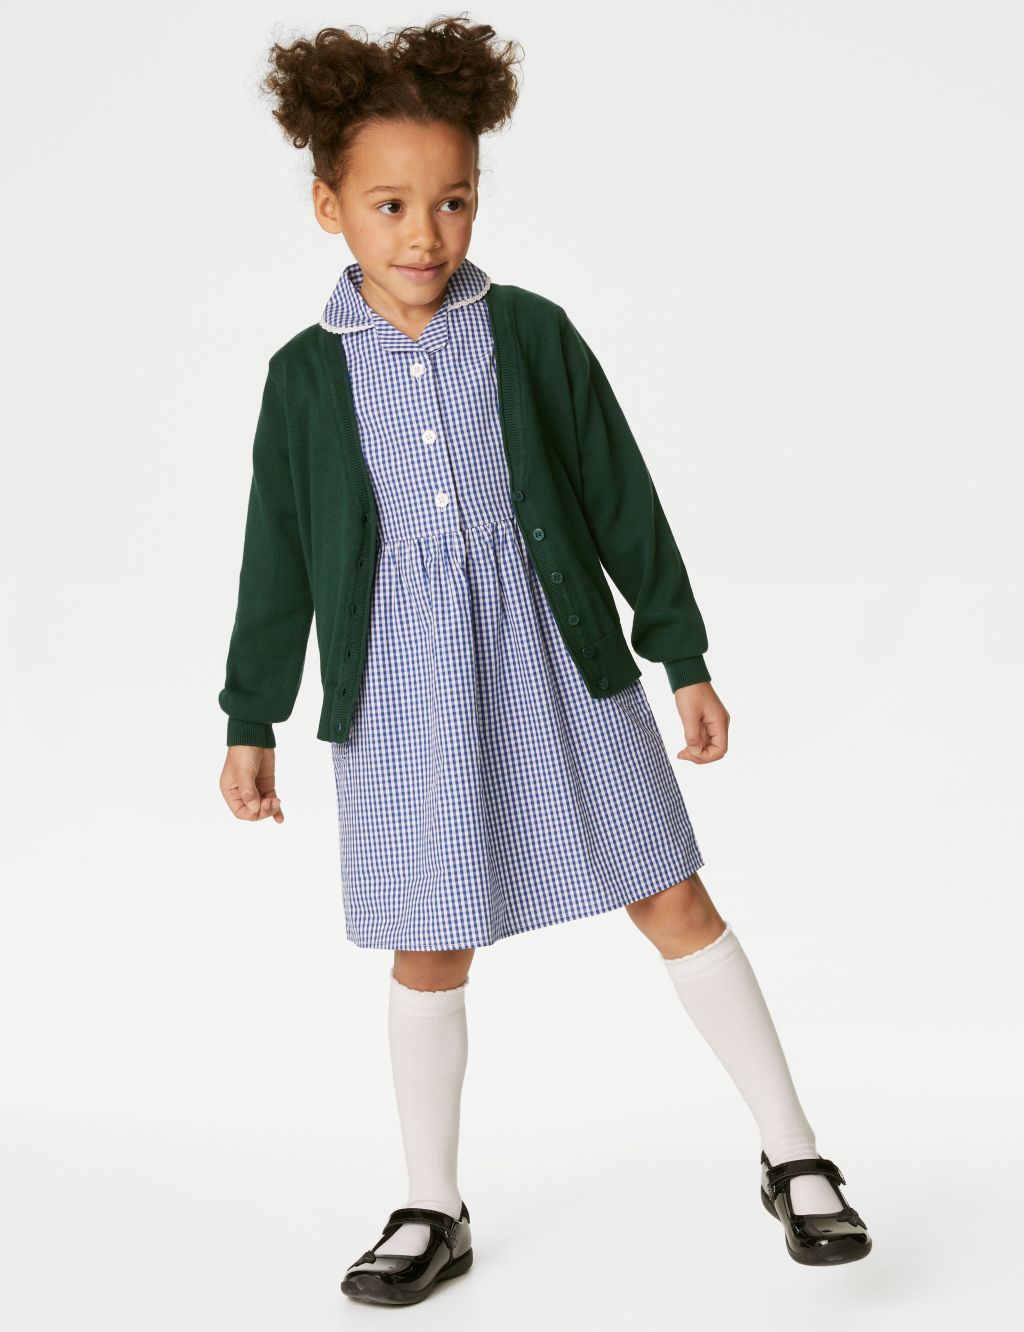 2pk Girls' Pure Cotton School Cardigan (3-18 Yrs) image 2